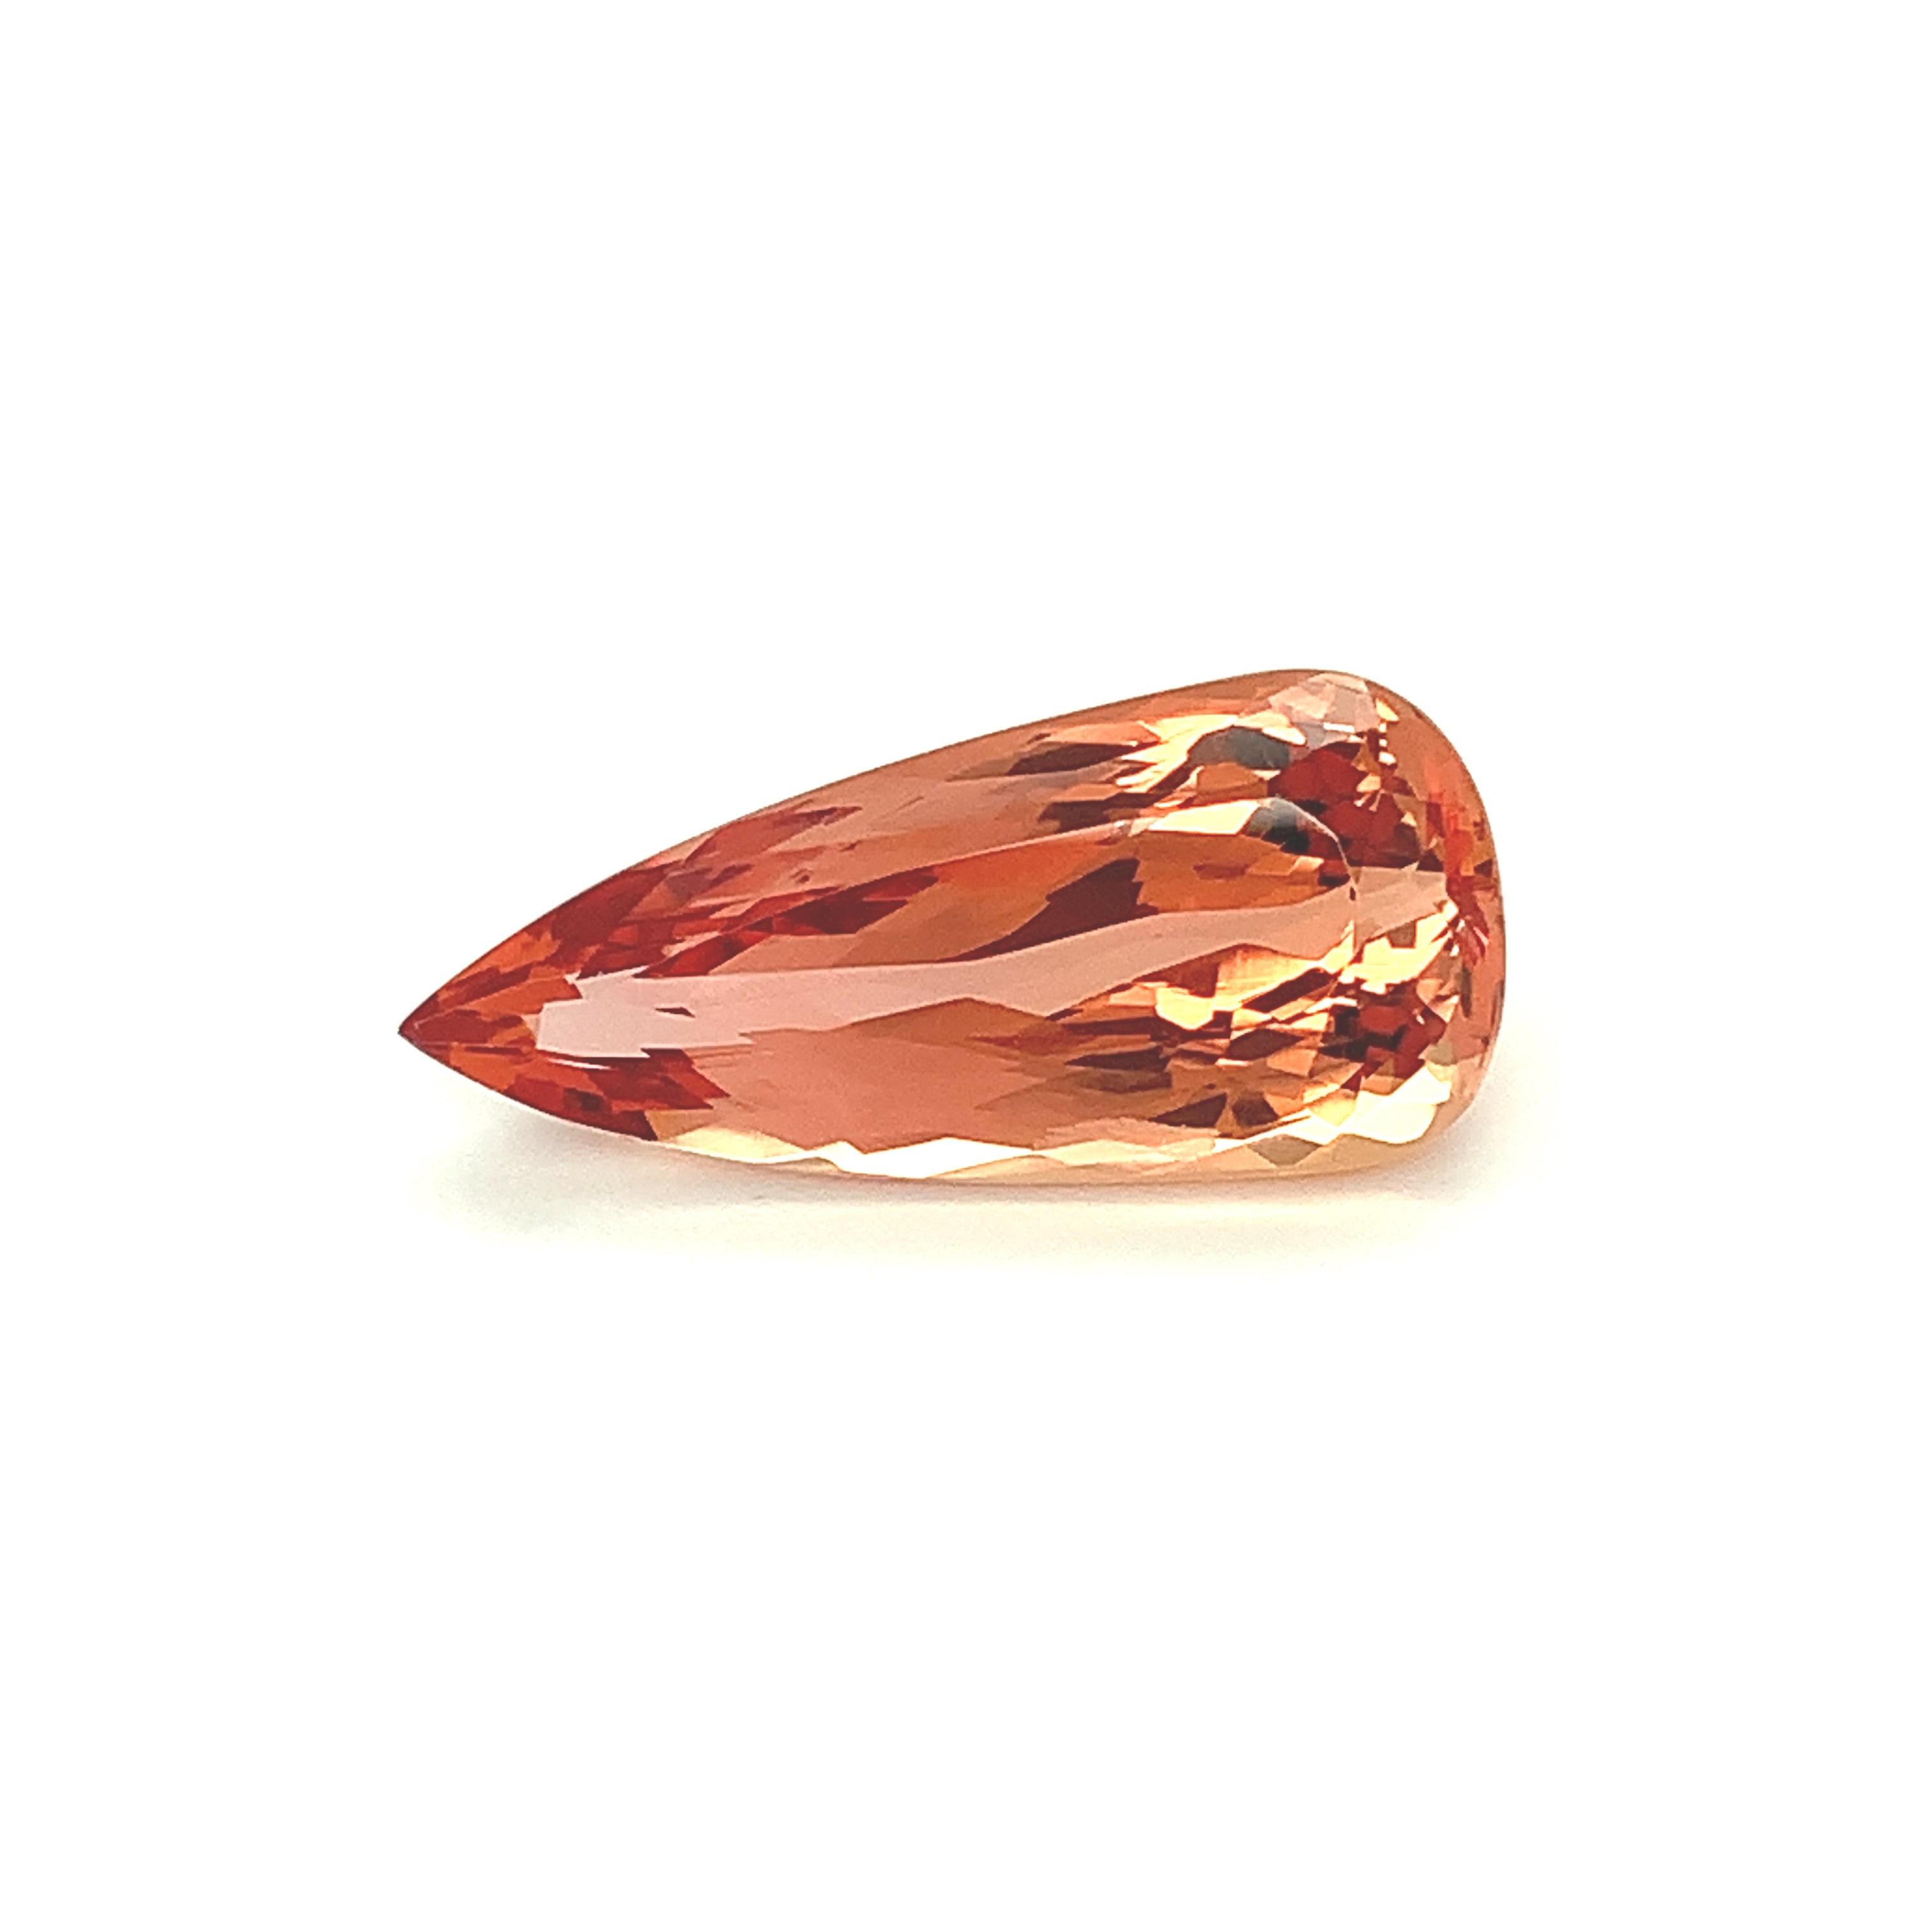 Topaze impériale orange 15,90 carats, pierre précieuse non sertie, certifiée GIA en vente 7